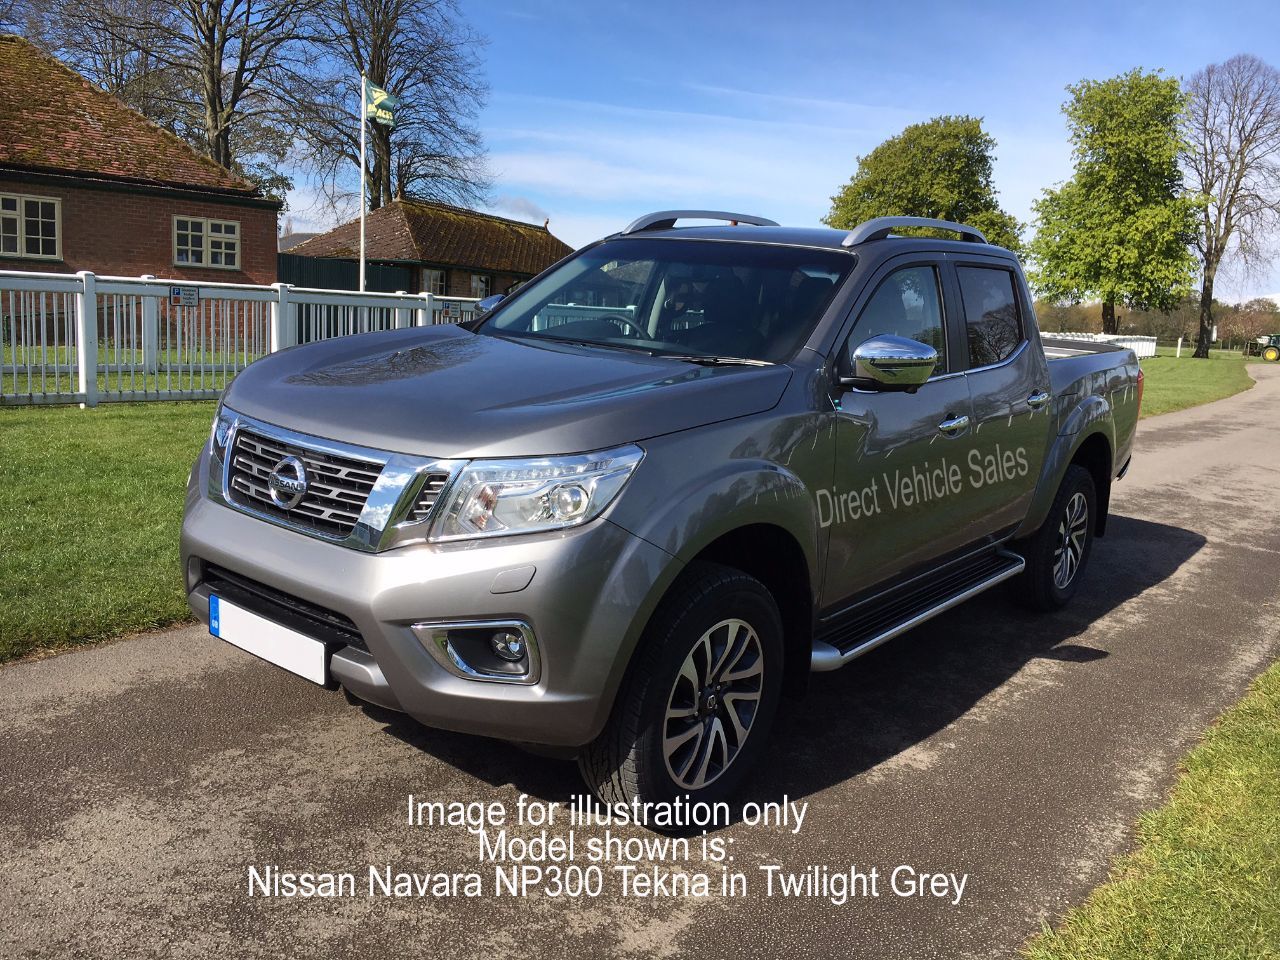 Nissan dealers north yorkshire #7